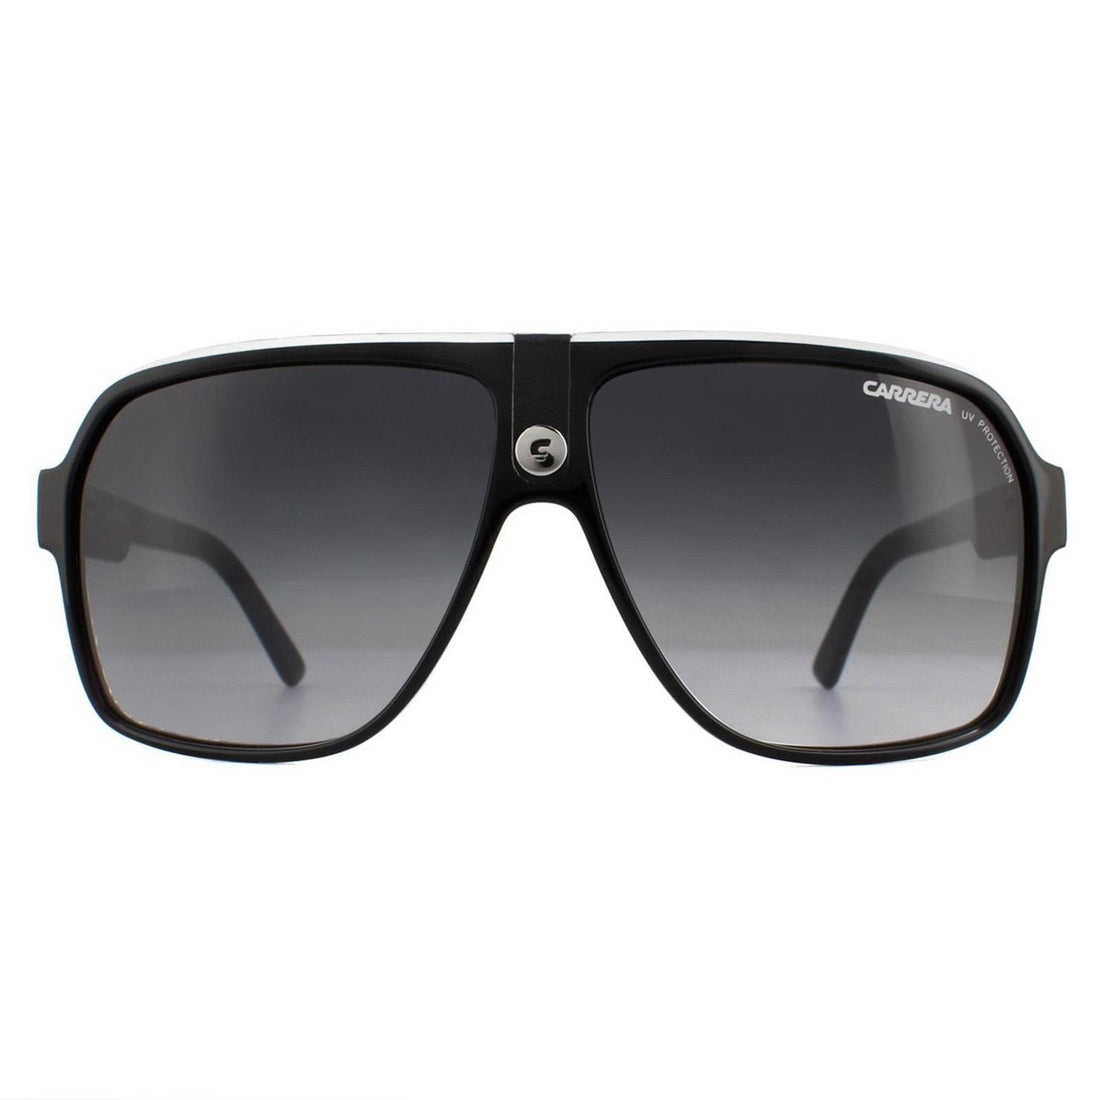 Carrera 33 Sunglasses Black and White / Grey Gradient